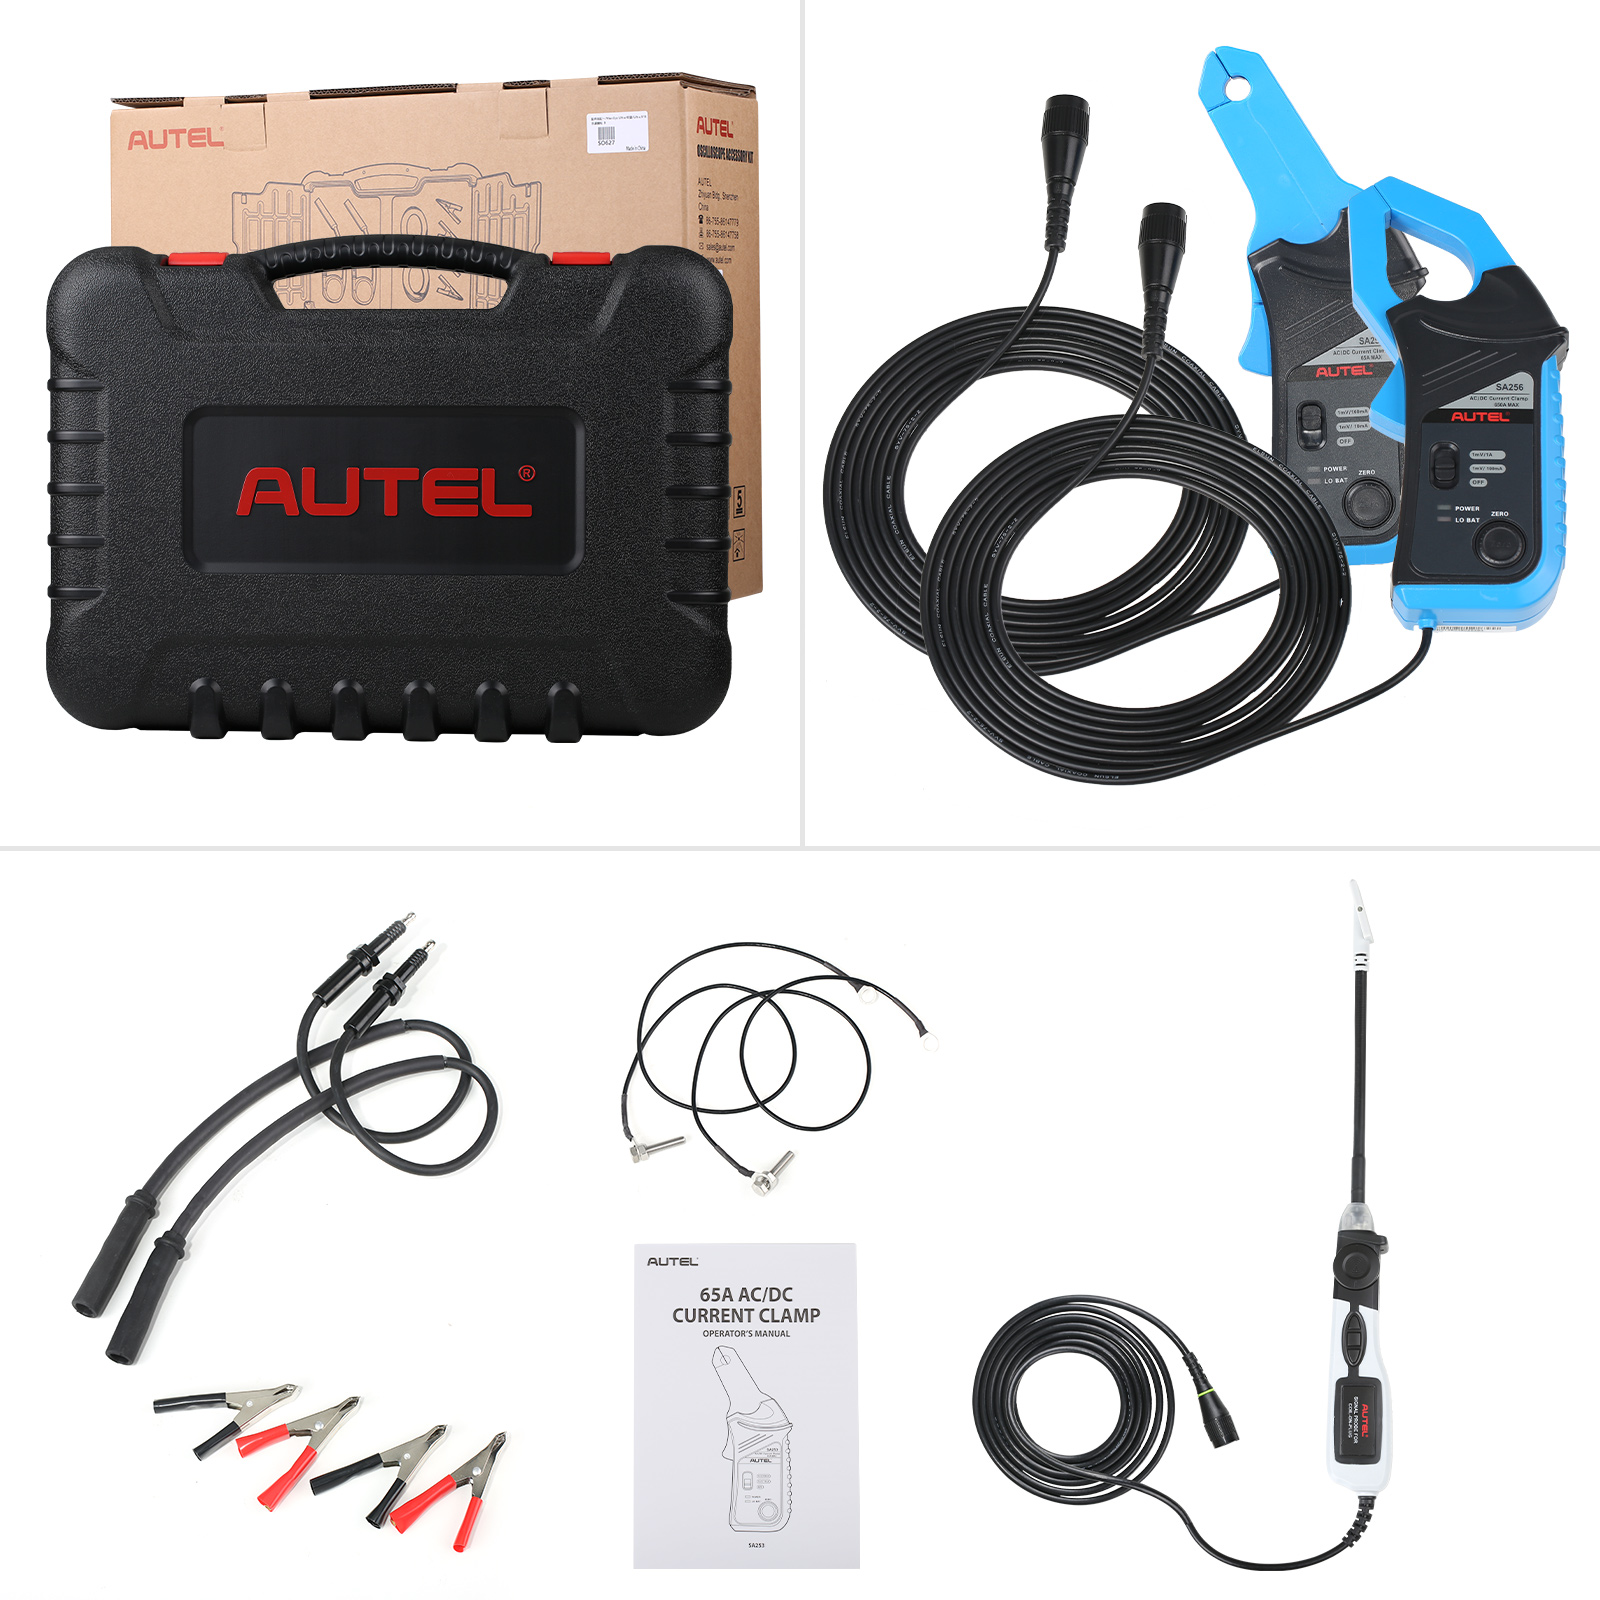 Autel MSOAK Oscilloscope Accessory Kit